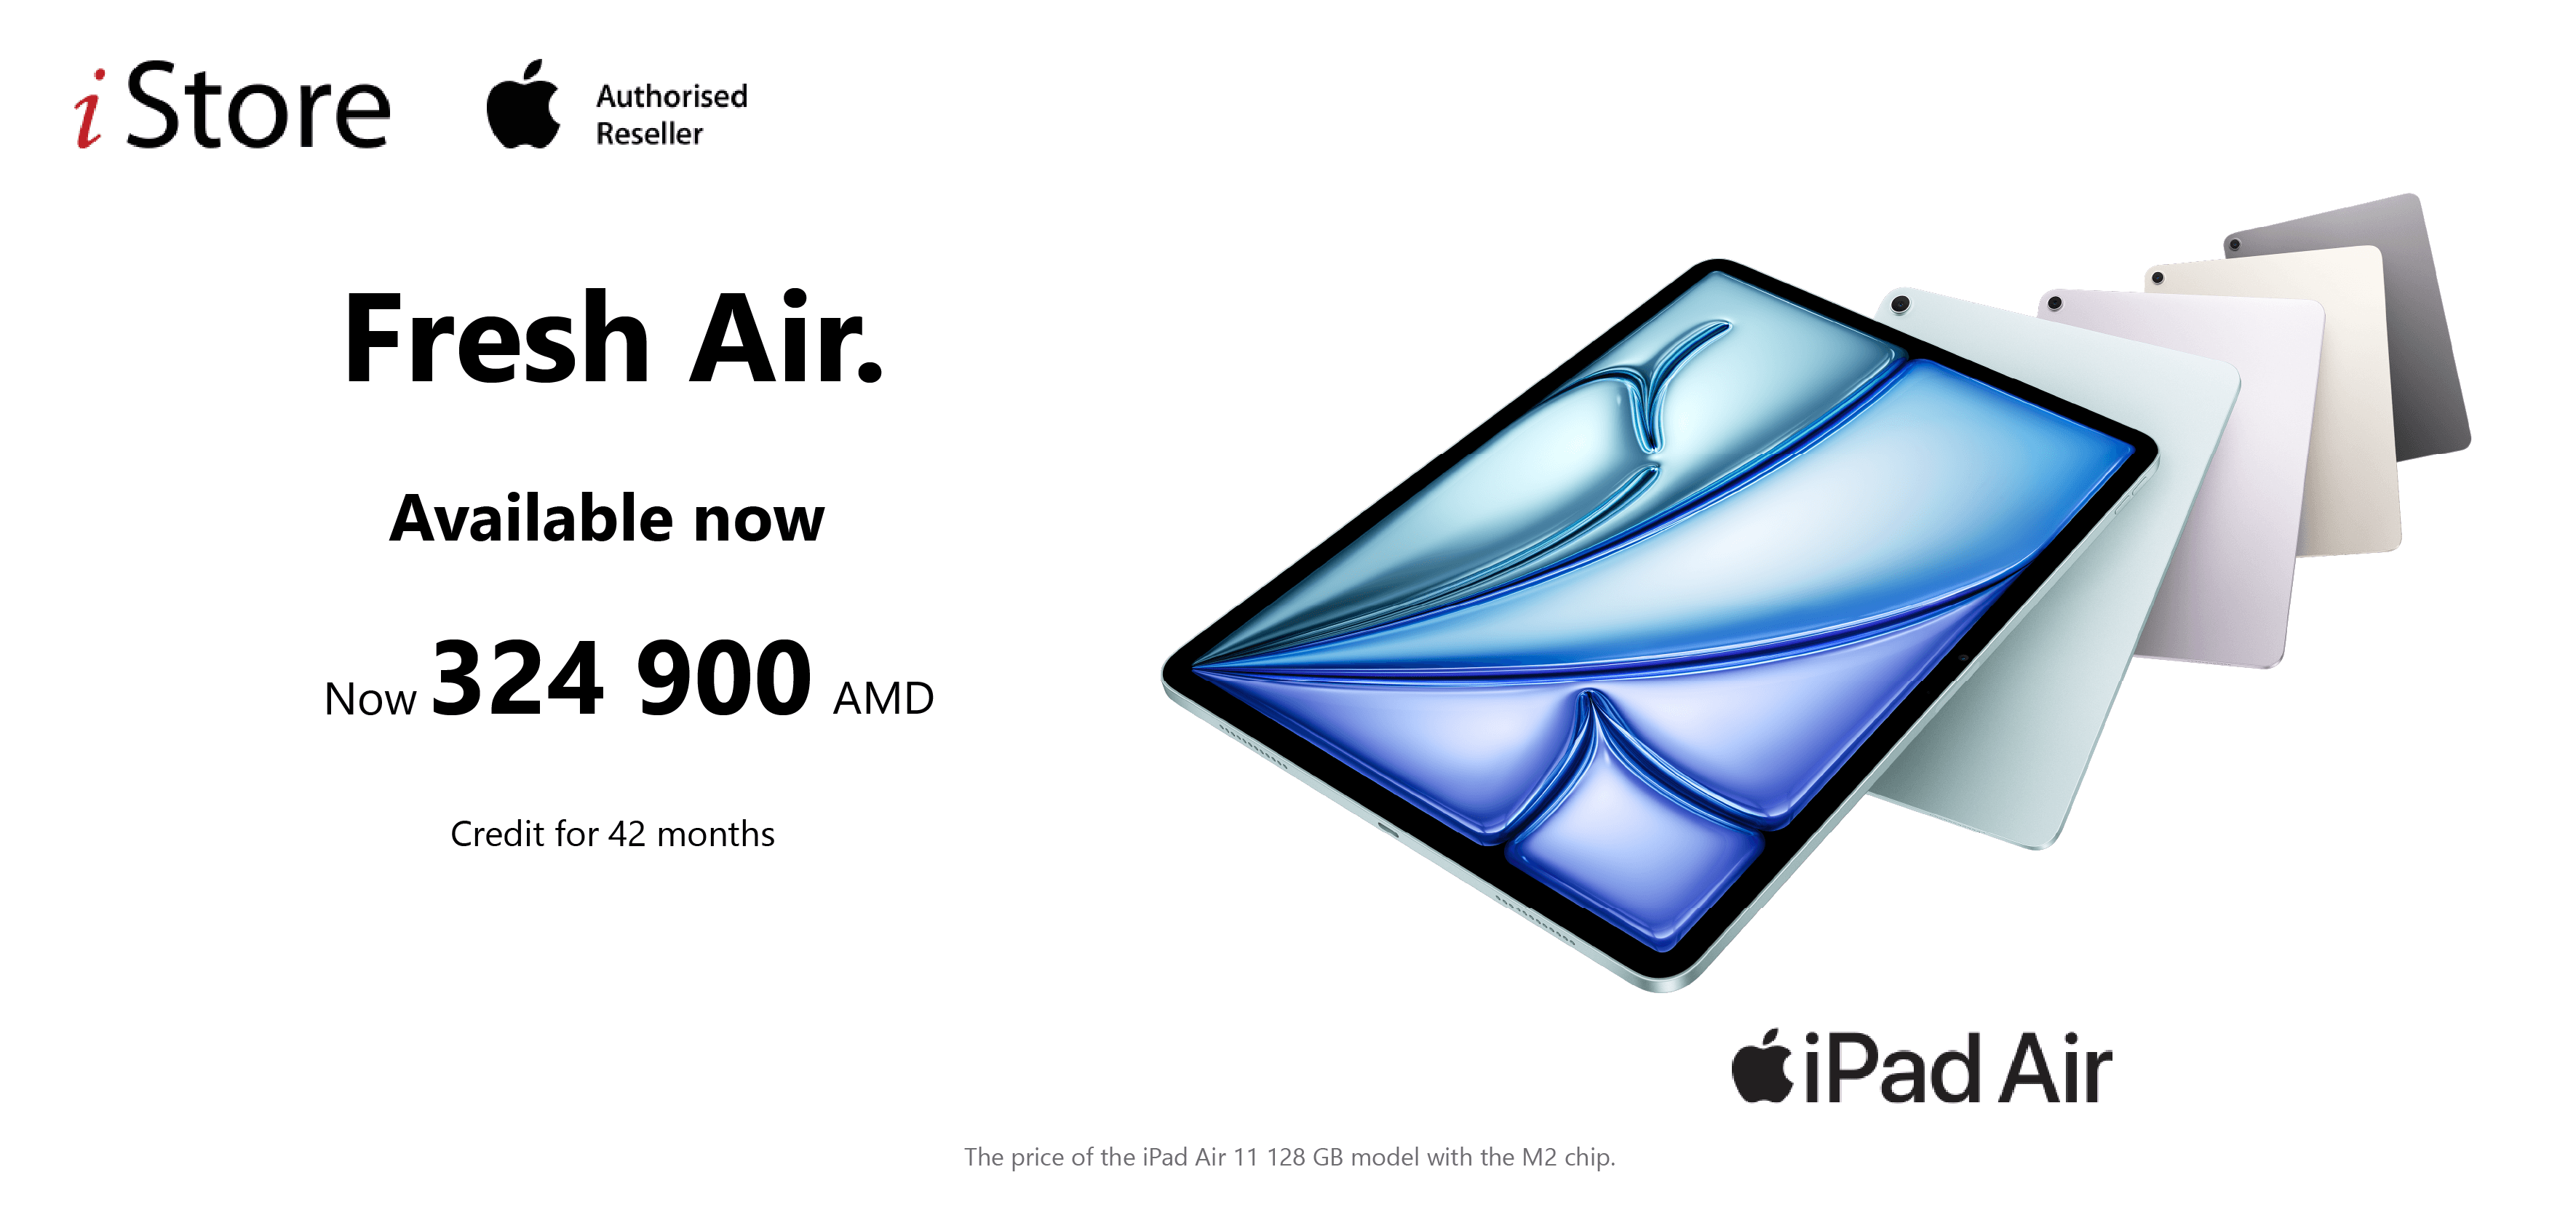 iPad Air available now